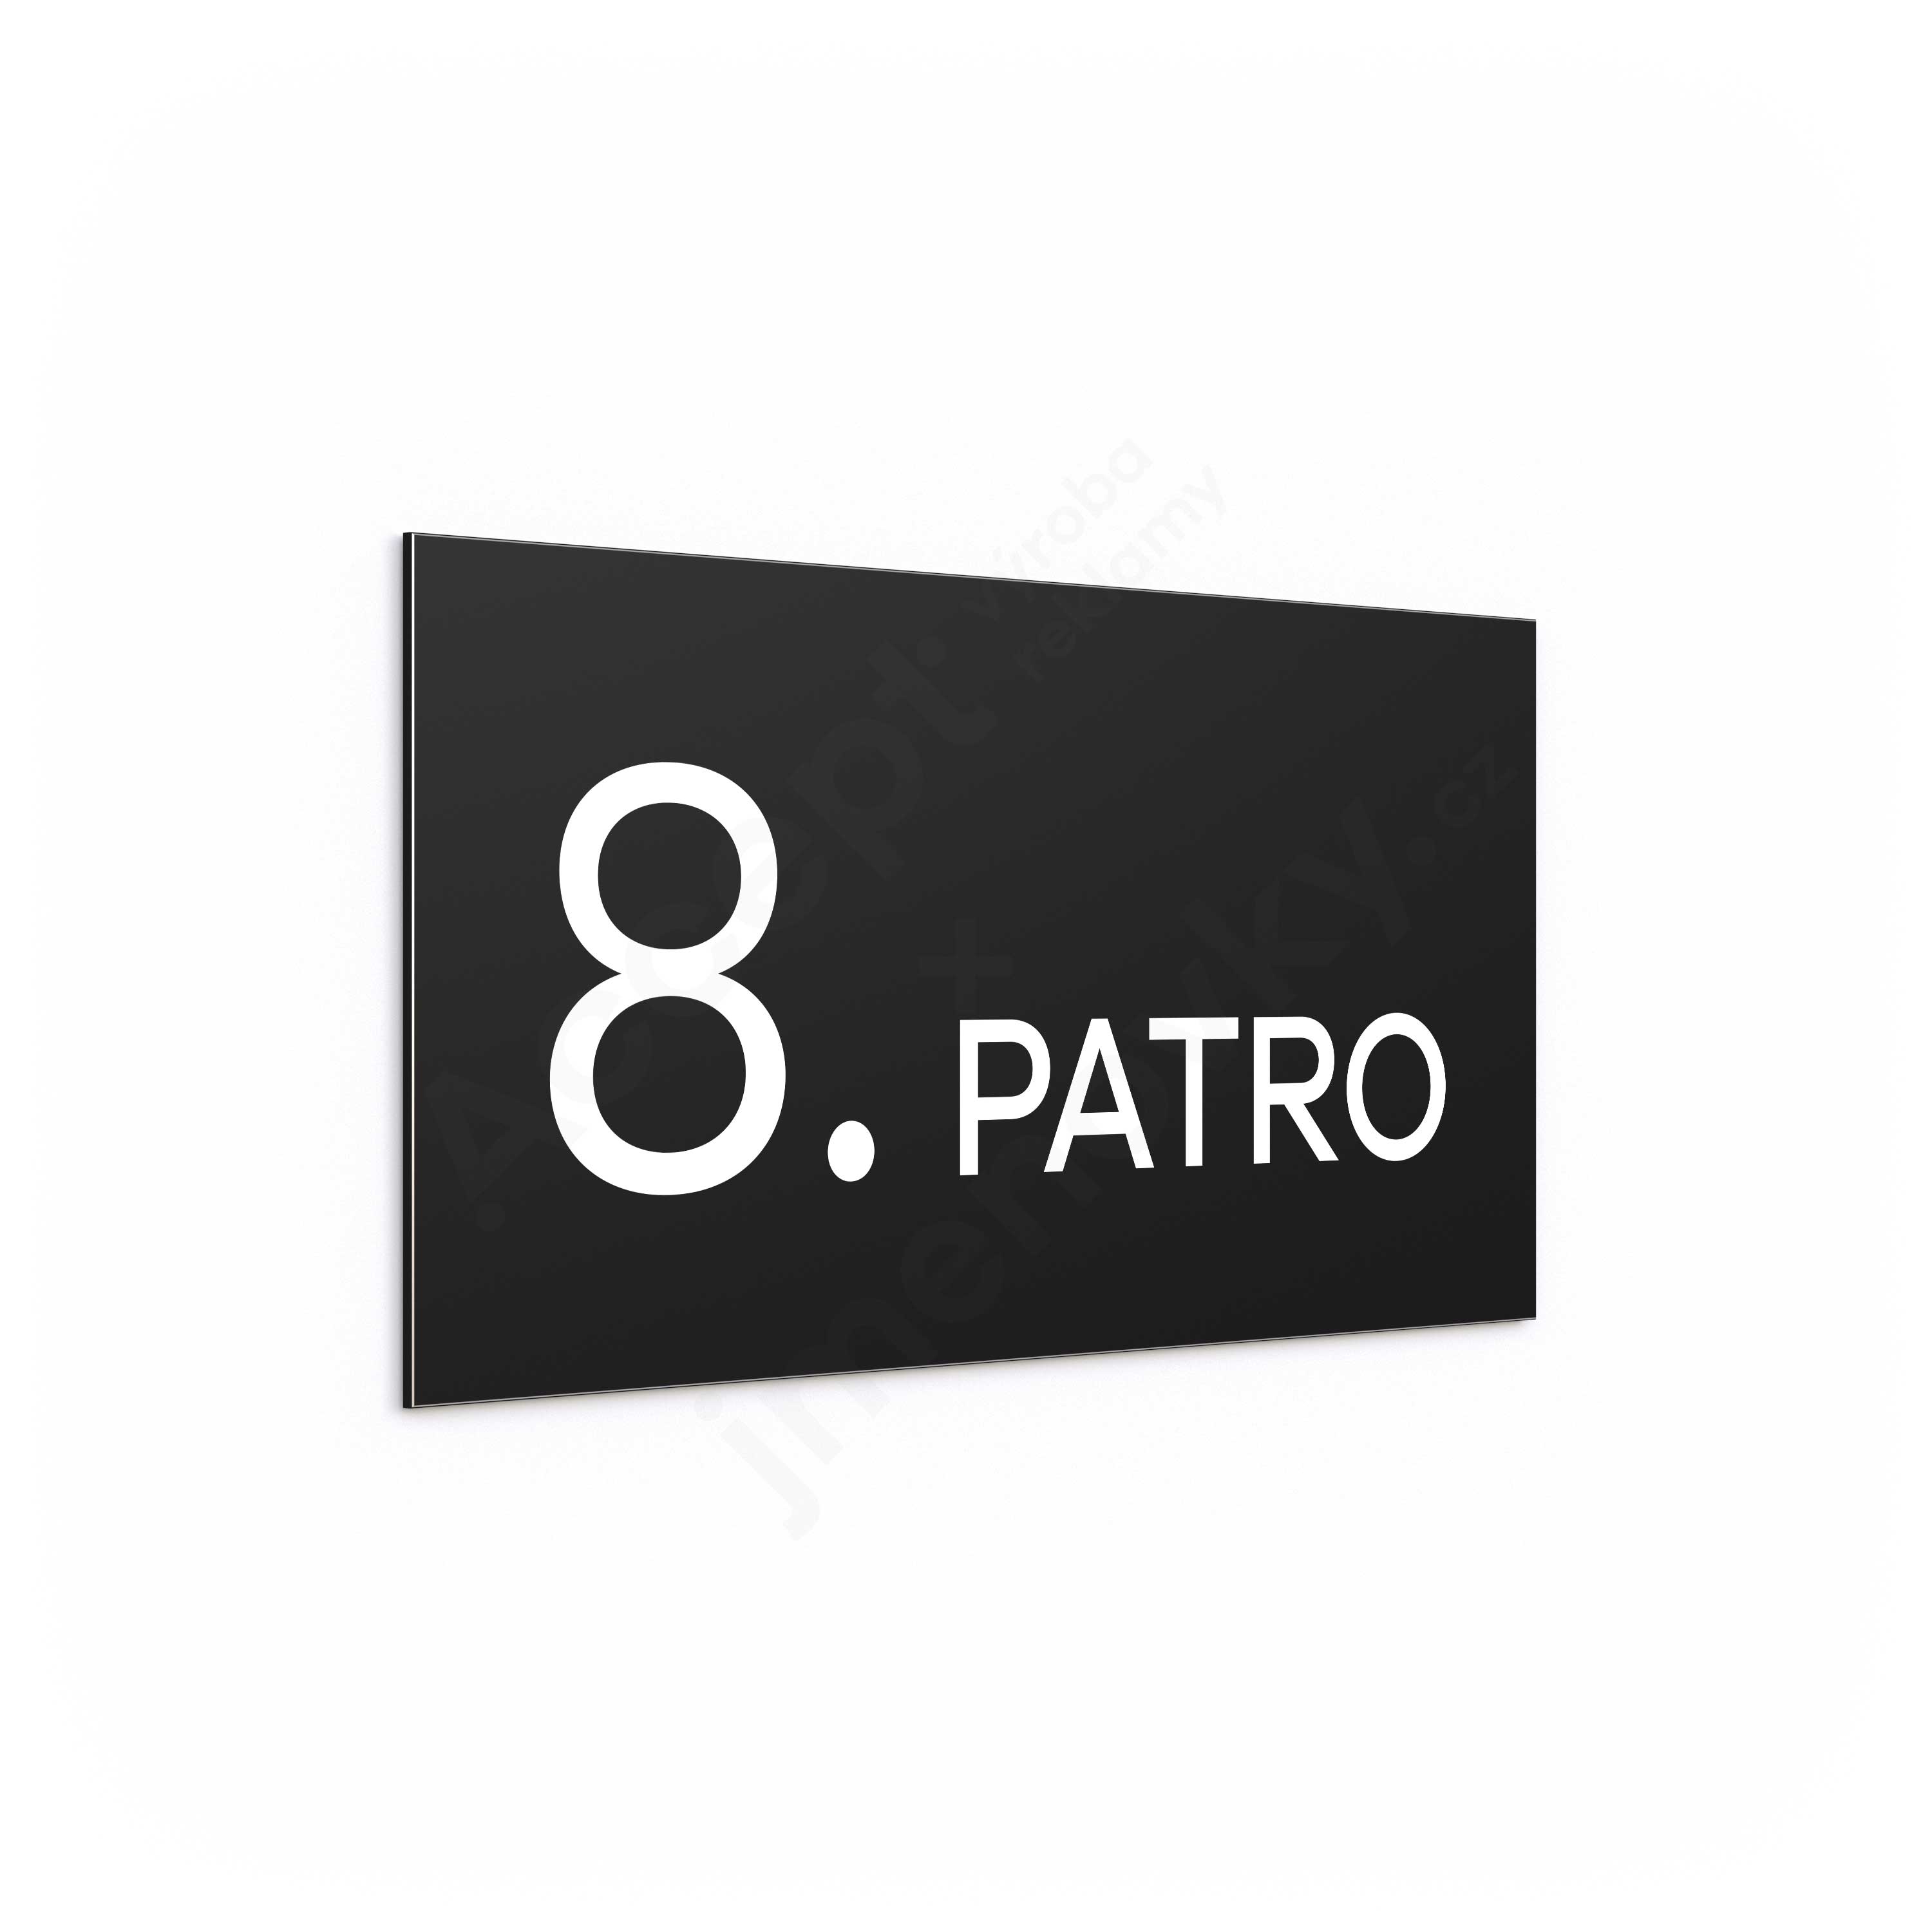 Označení podlaží "8. PATRO" - černá tabulka - bílý popis